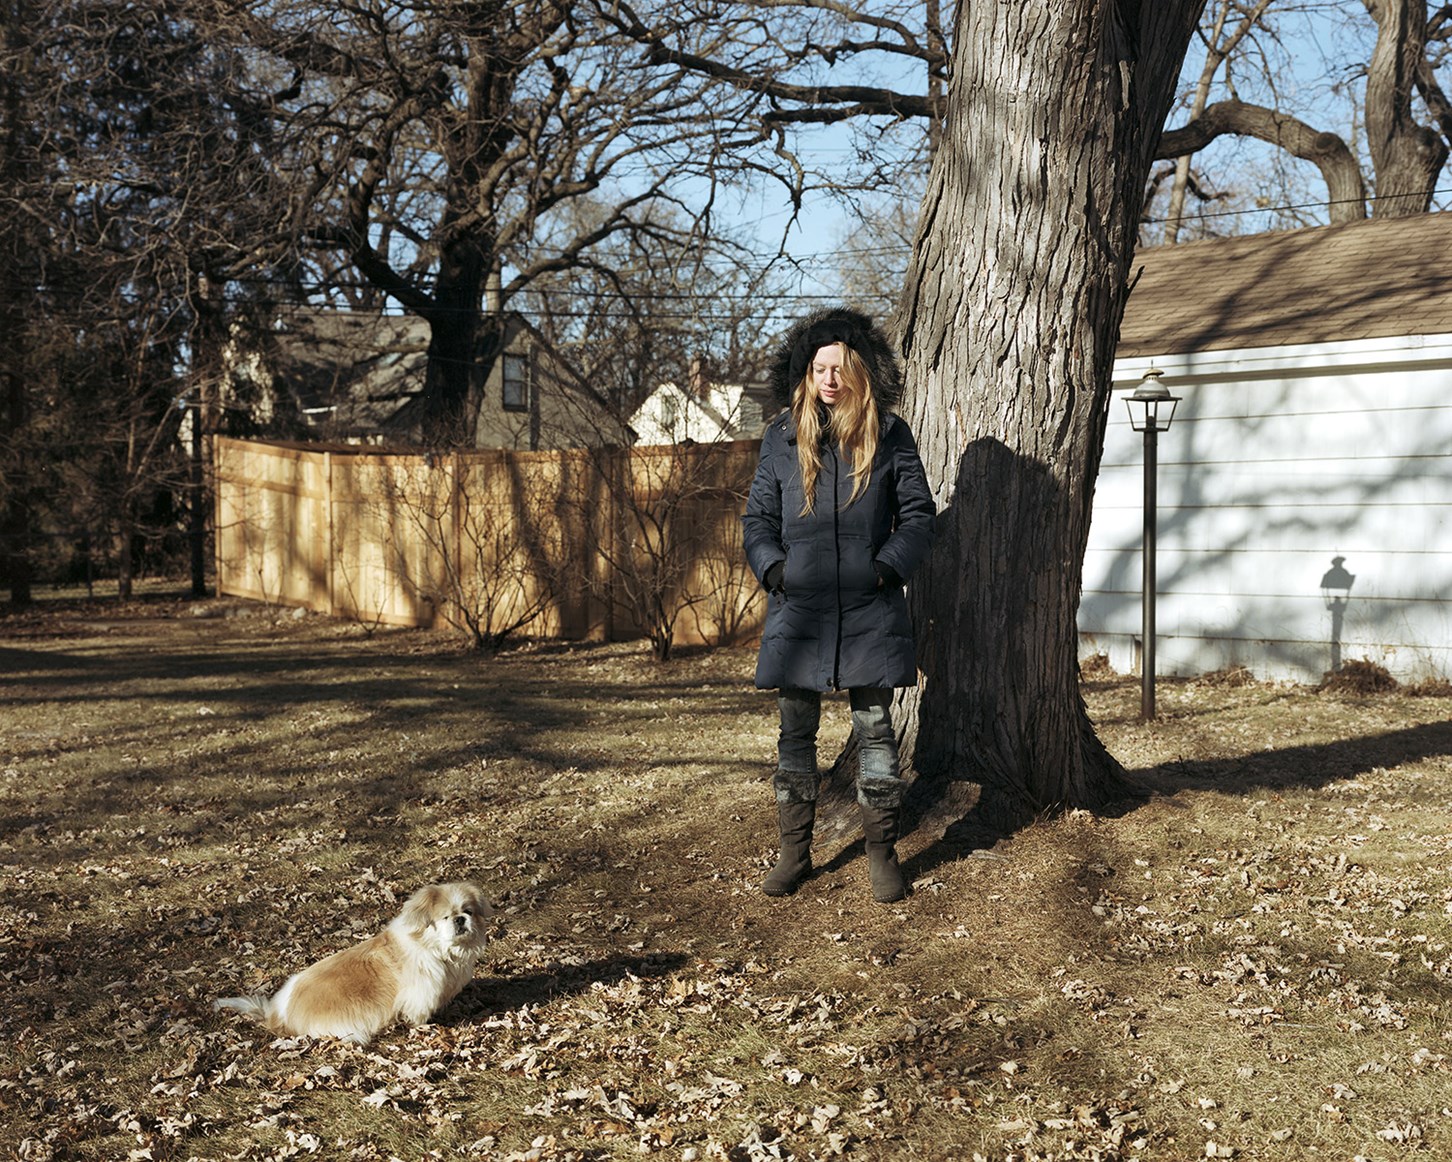 Peeka and Jennifer, Minnesota, December 2011